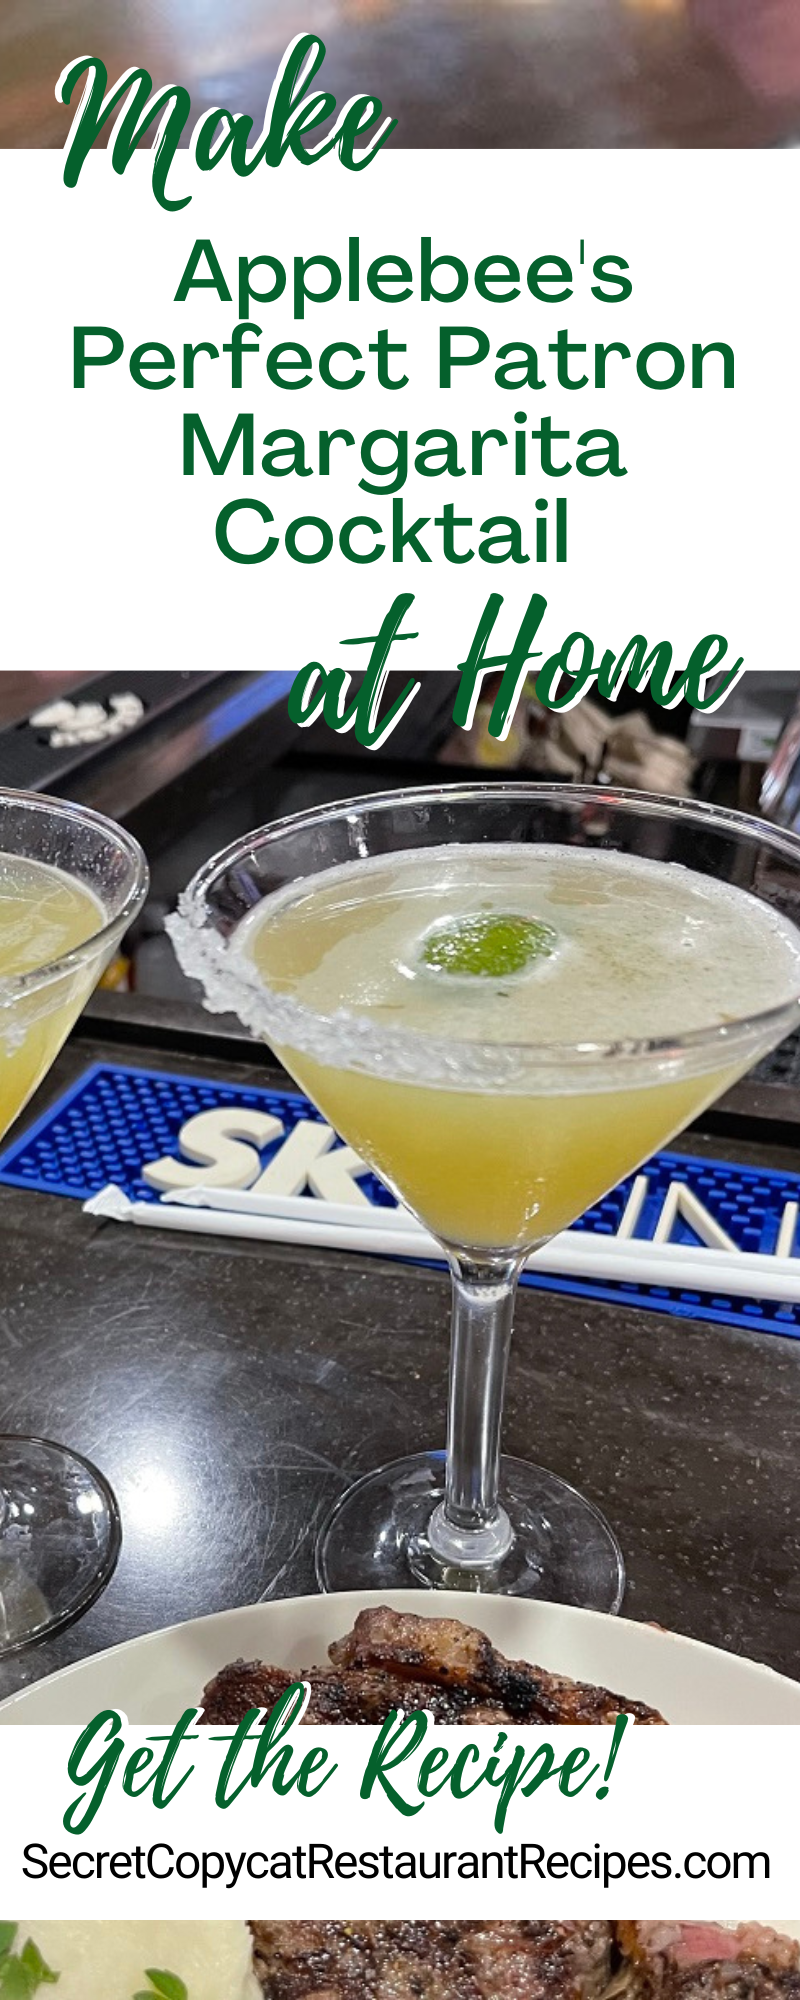 Applebee's Perfect Patron Margarita Cocktail Recipe